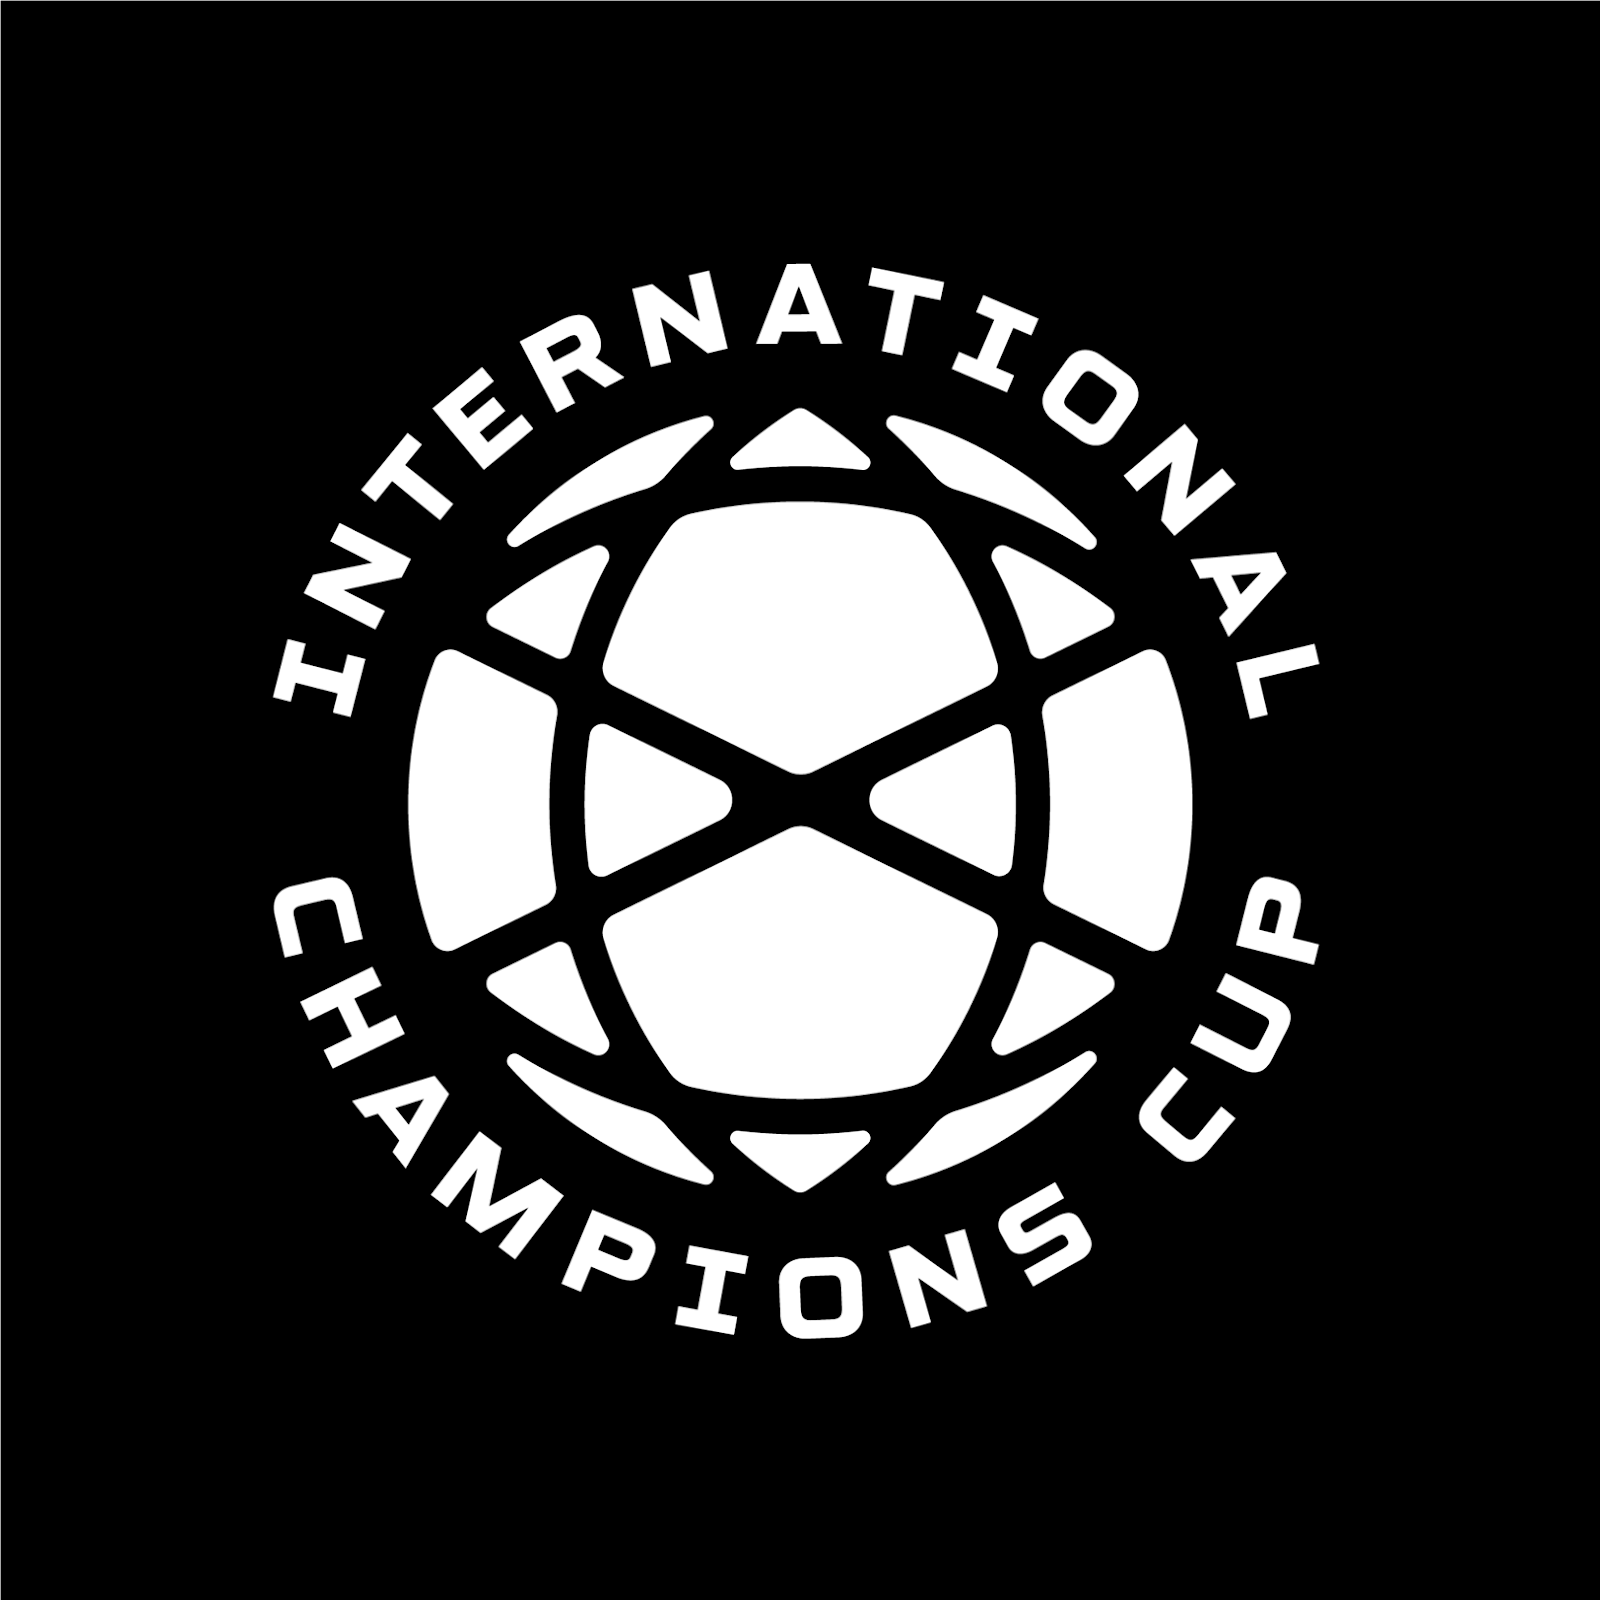 AllNew International Champions Cup Logo Revealed Footy Headlines